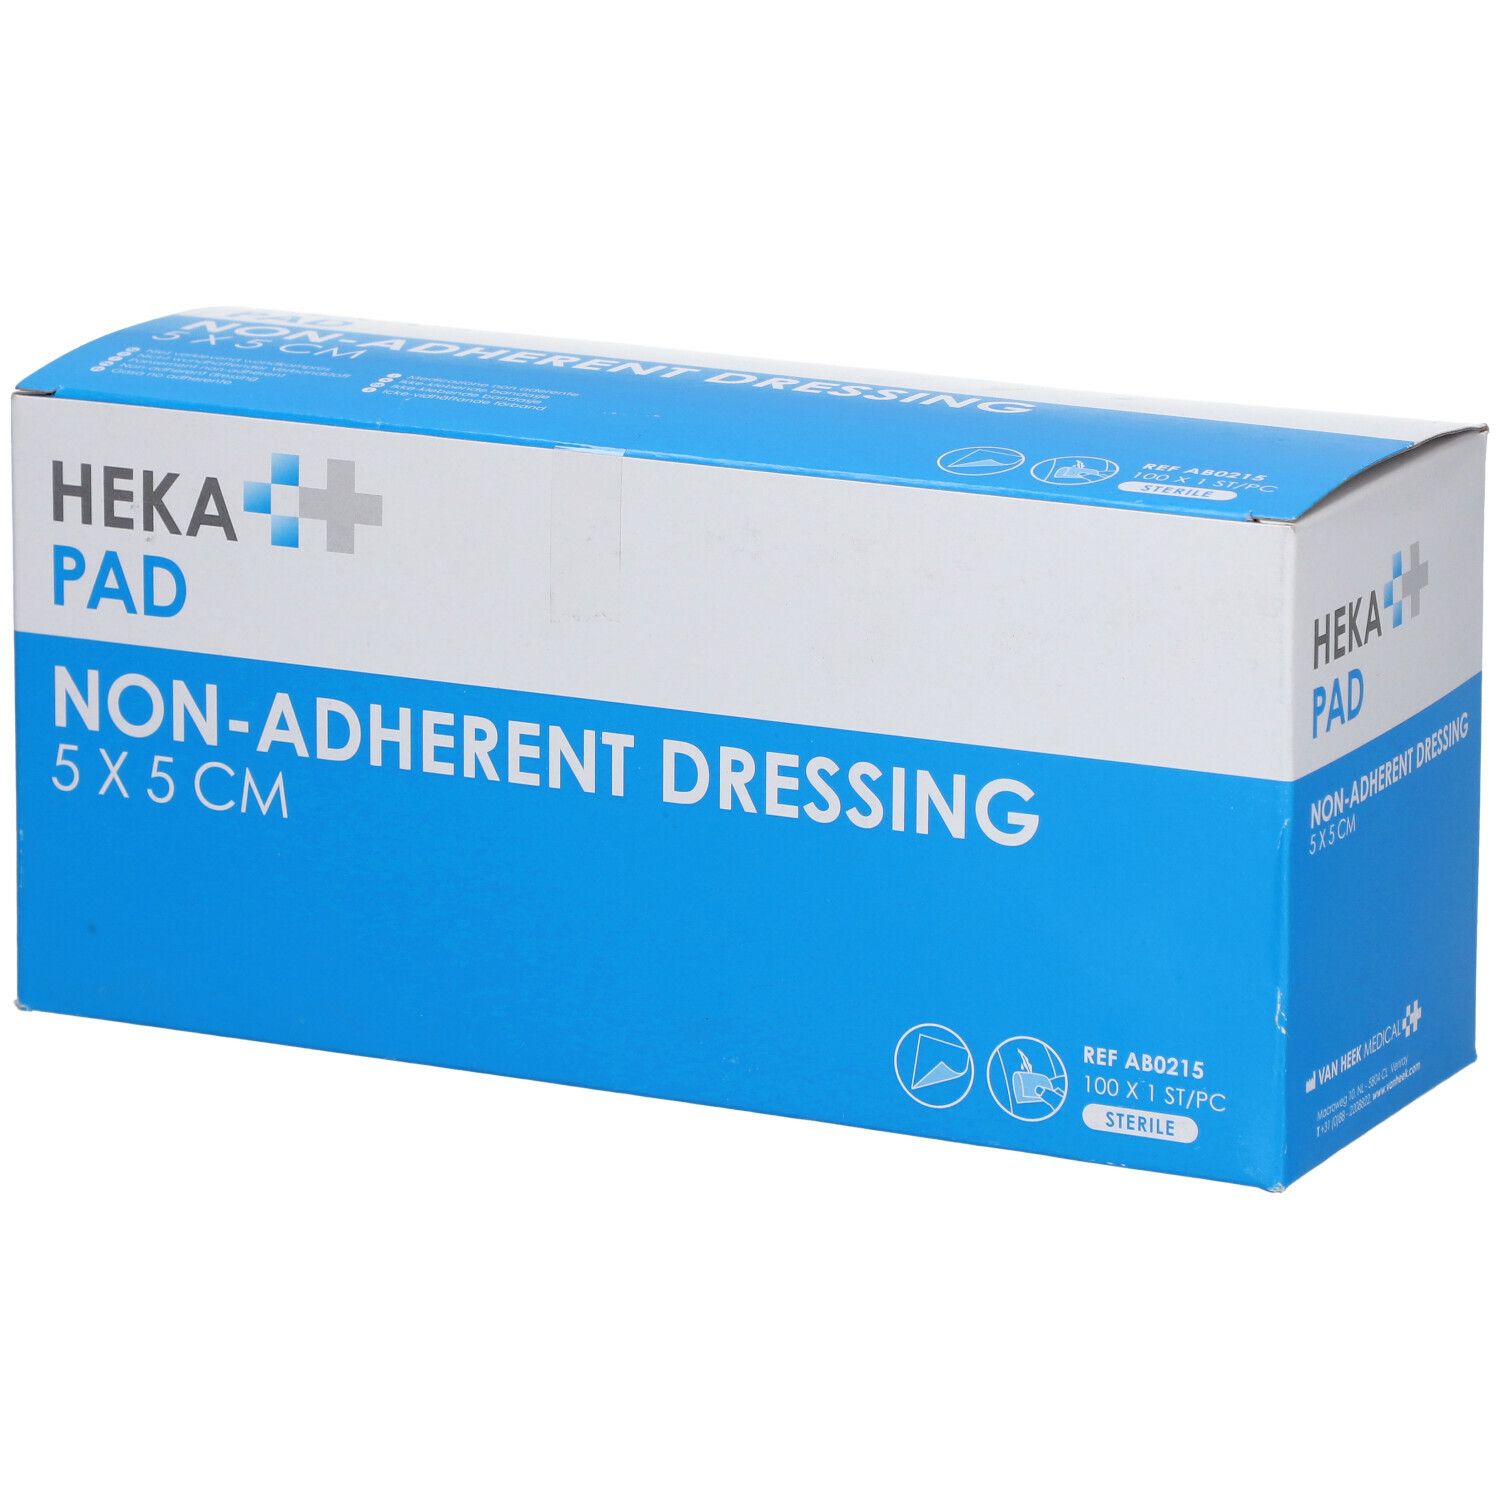 Image of HEKA PAD Dressing 5 x 5 cm